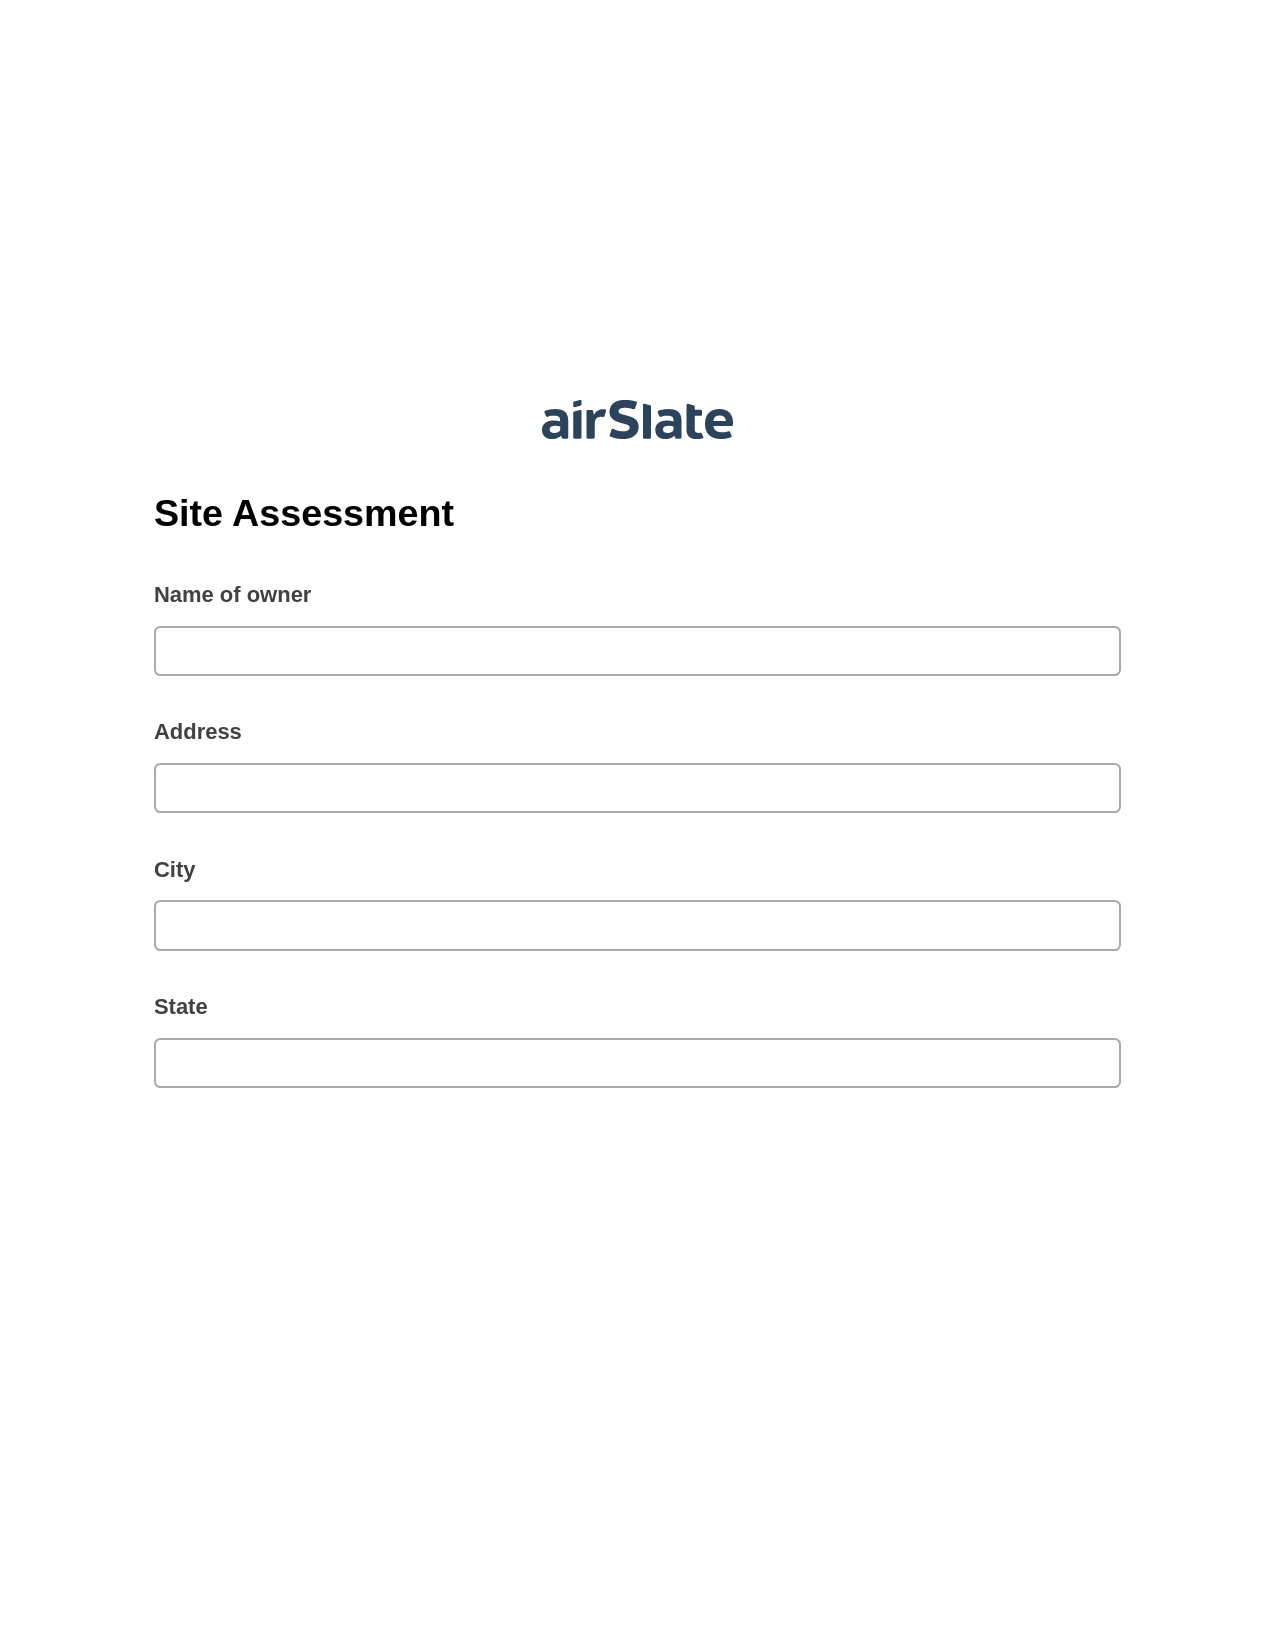 Site Assessment Pre-fill from MySQL Bot, Pre-fill with Custom Data Bot, Post-finish Document Bot